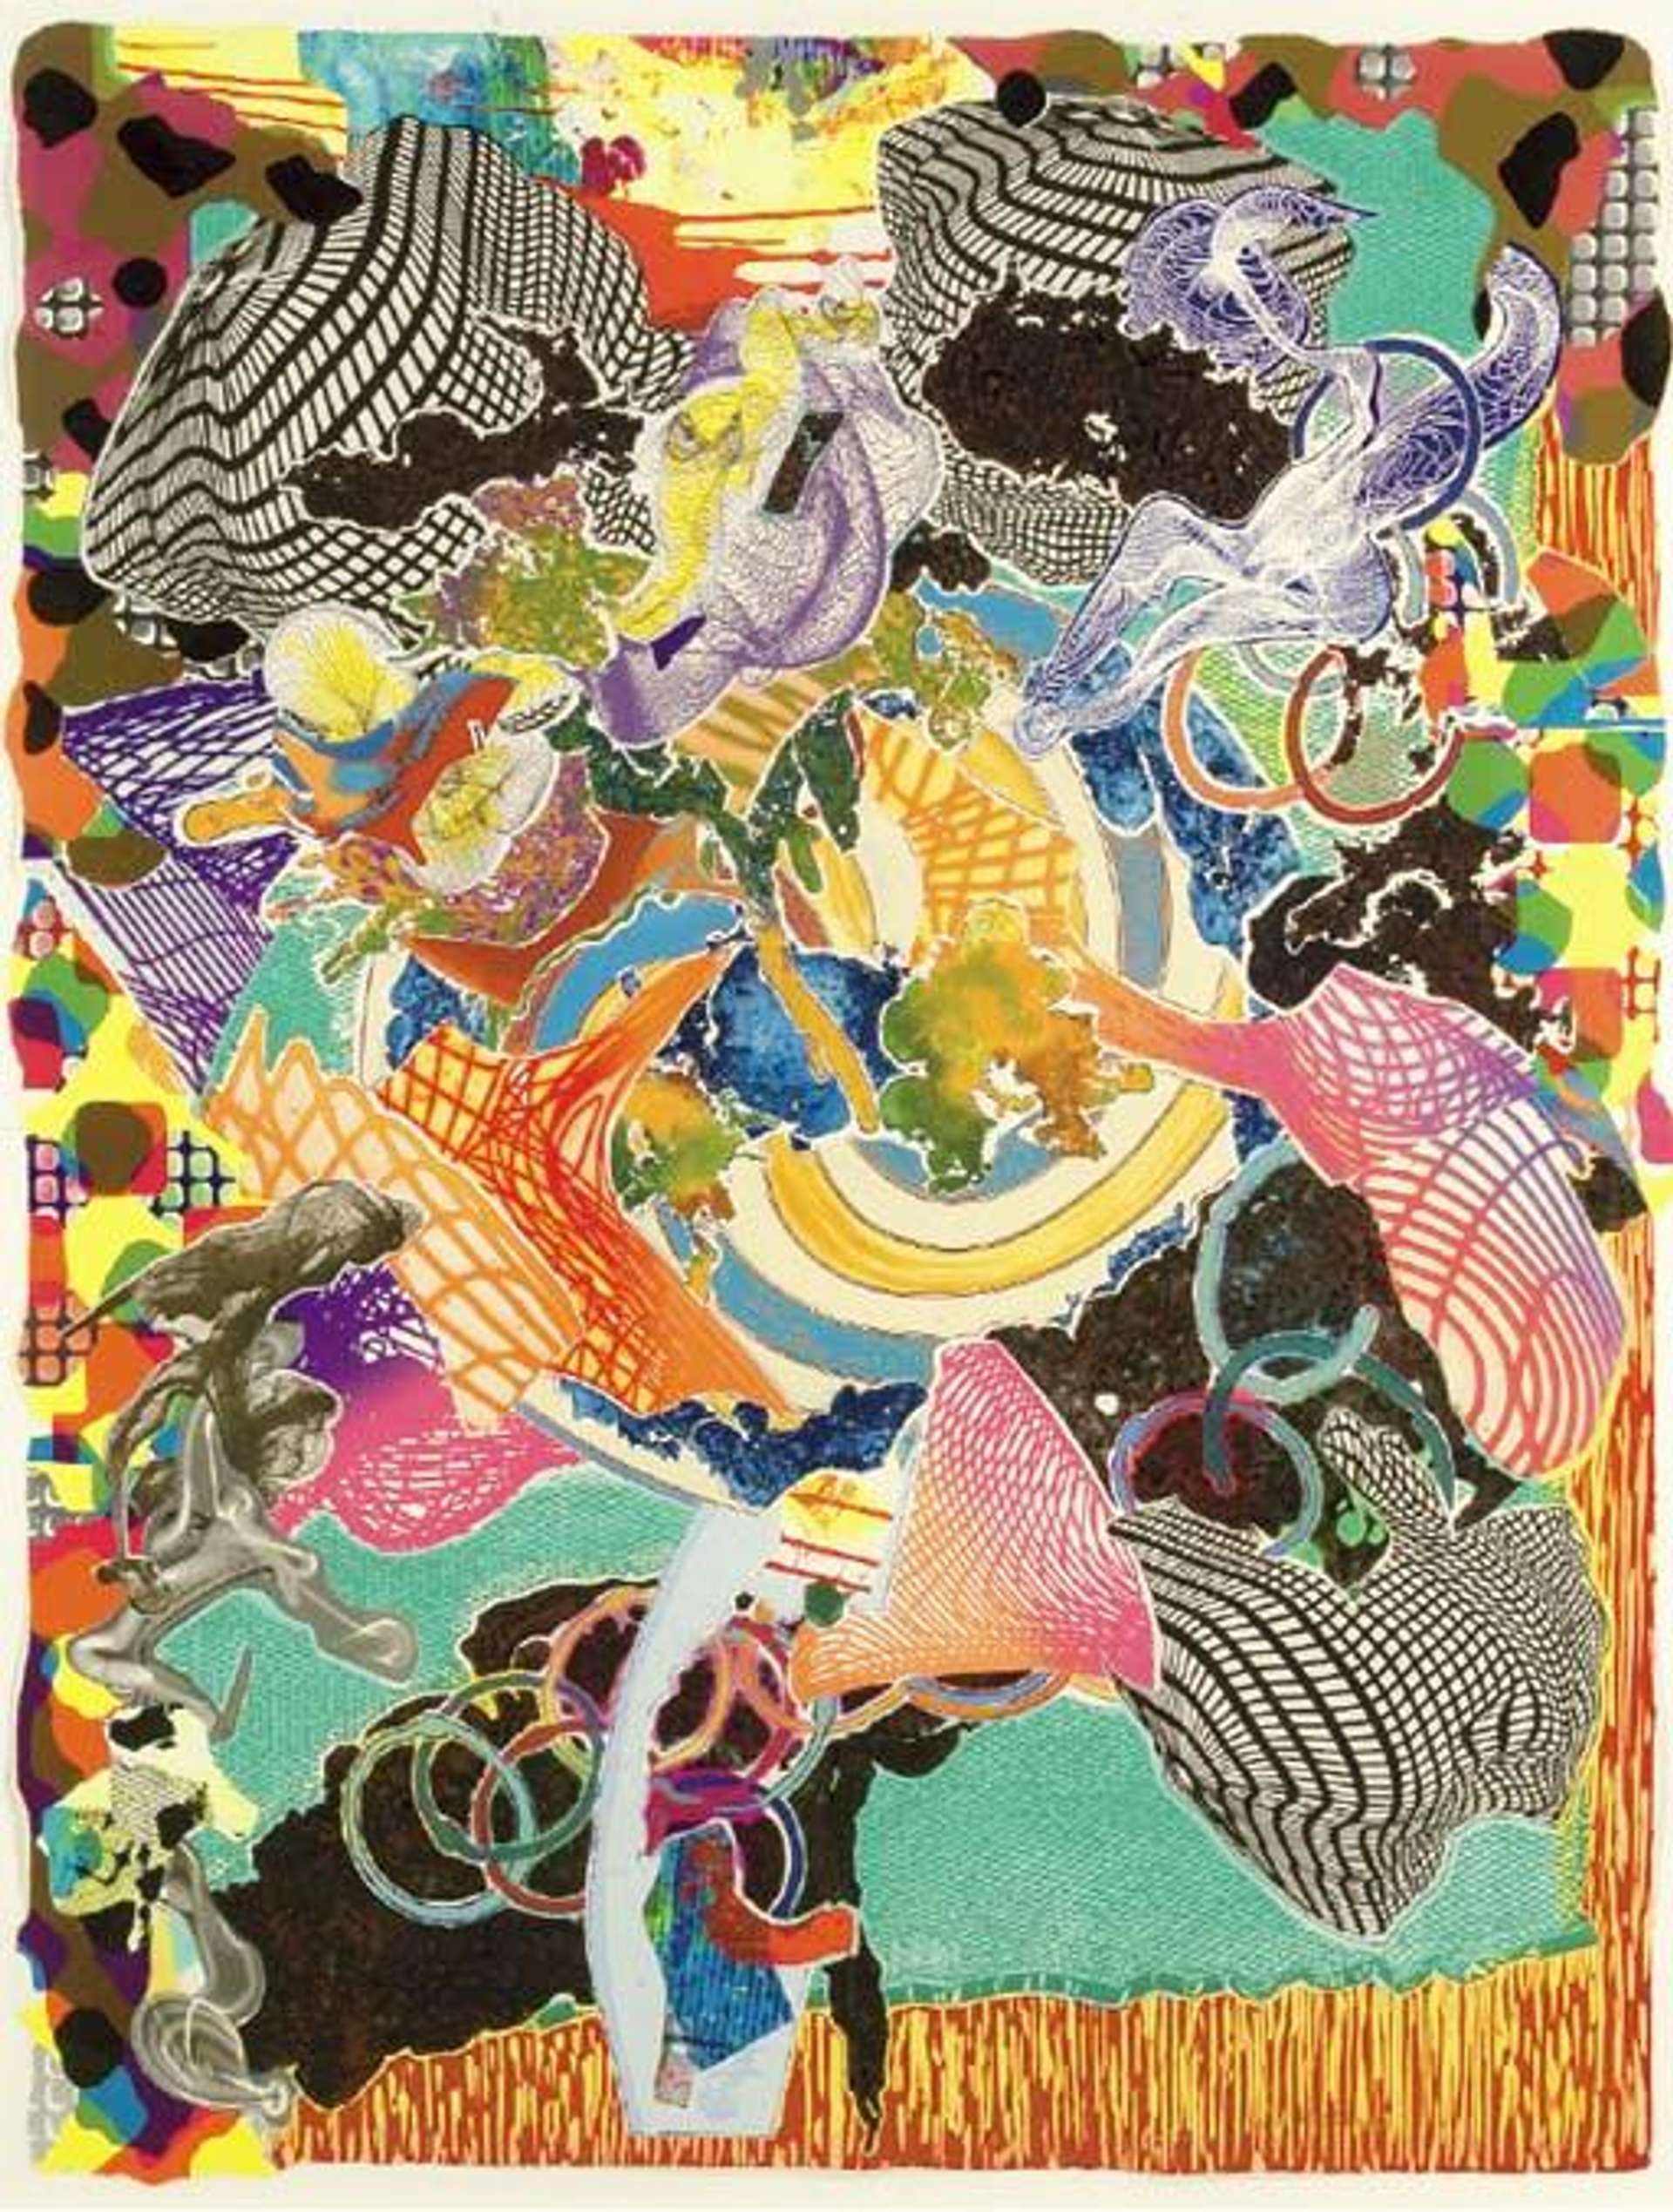 Juam - Signed Print by Frank Stella 1997 - MyArtBroker